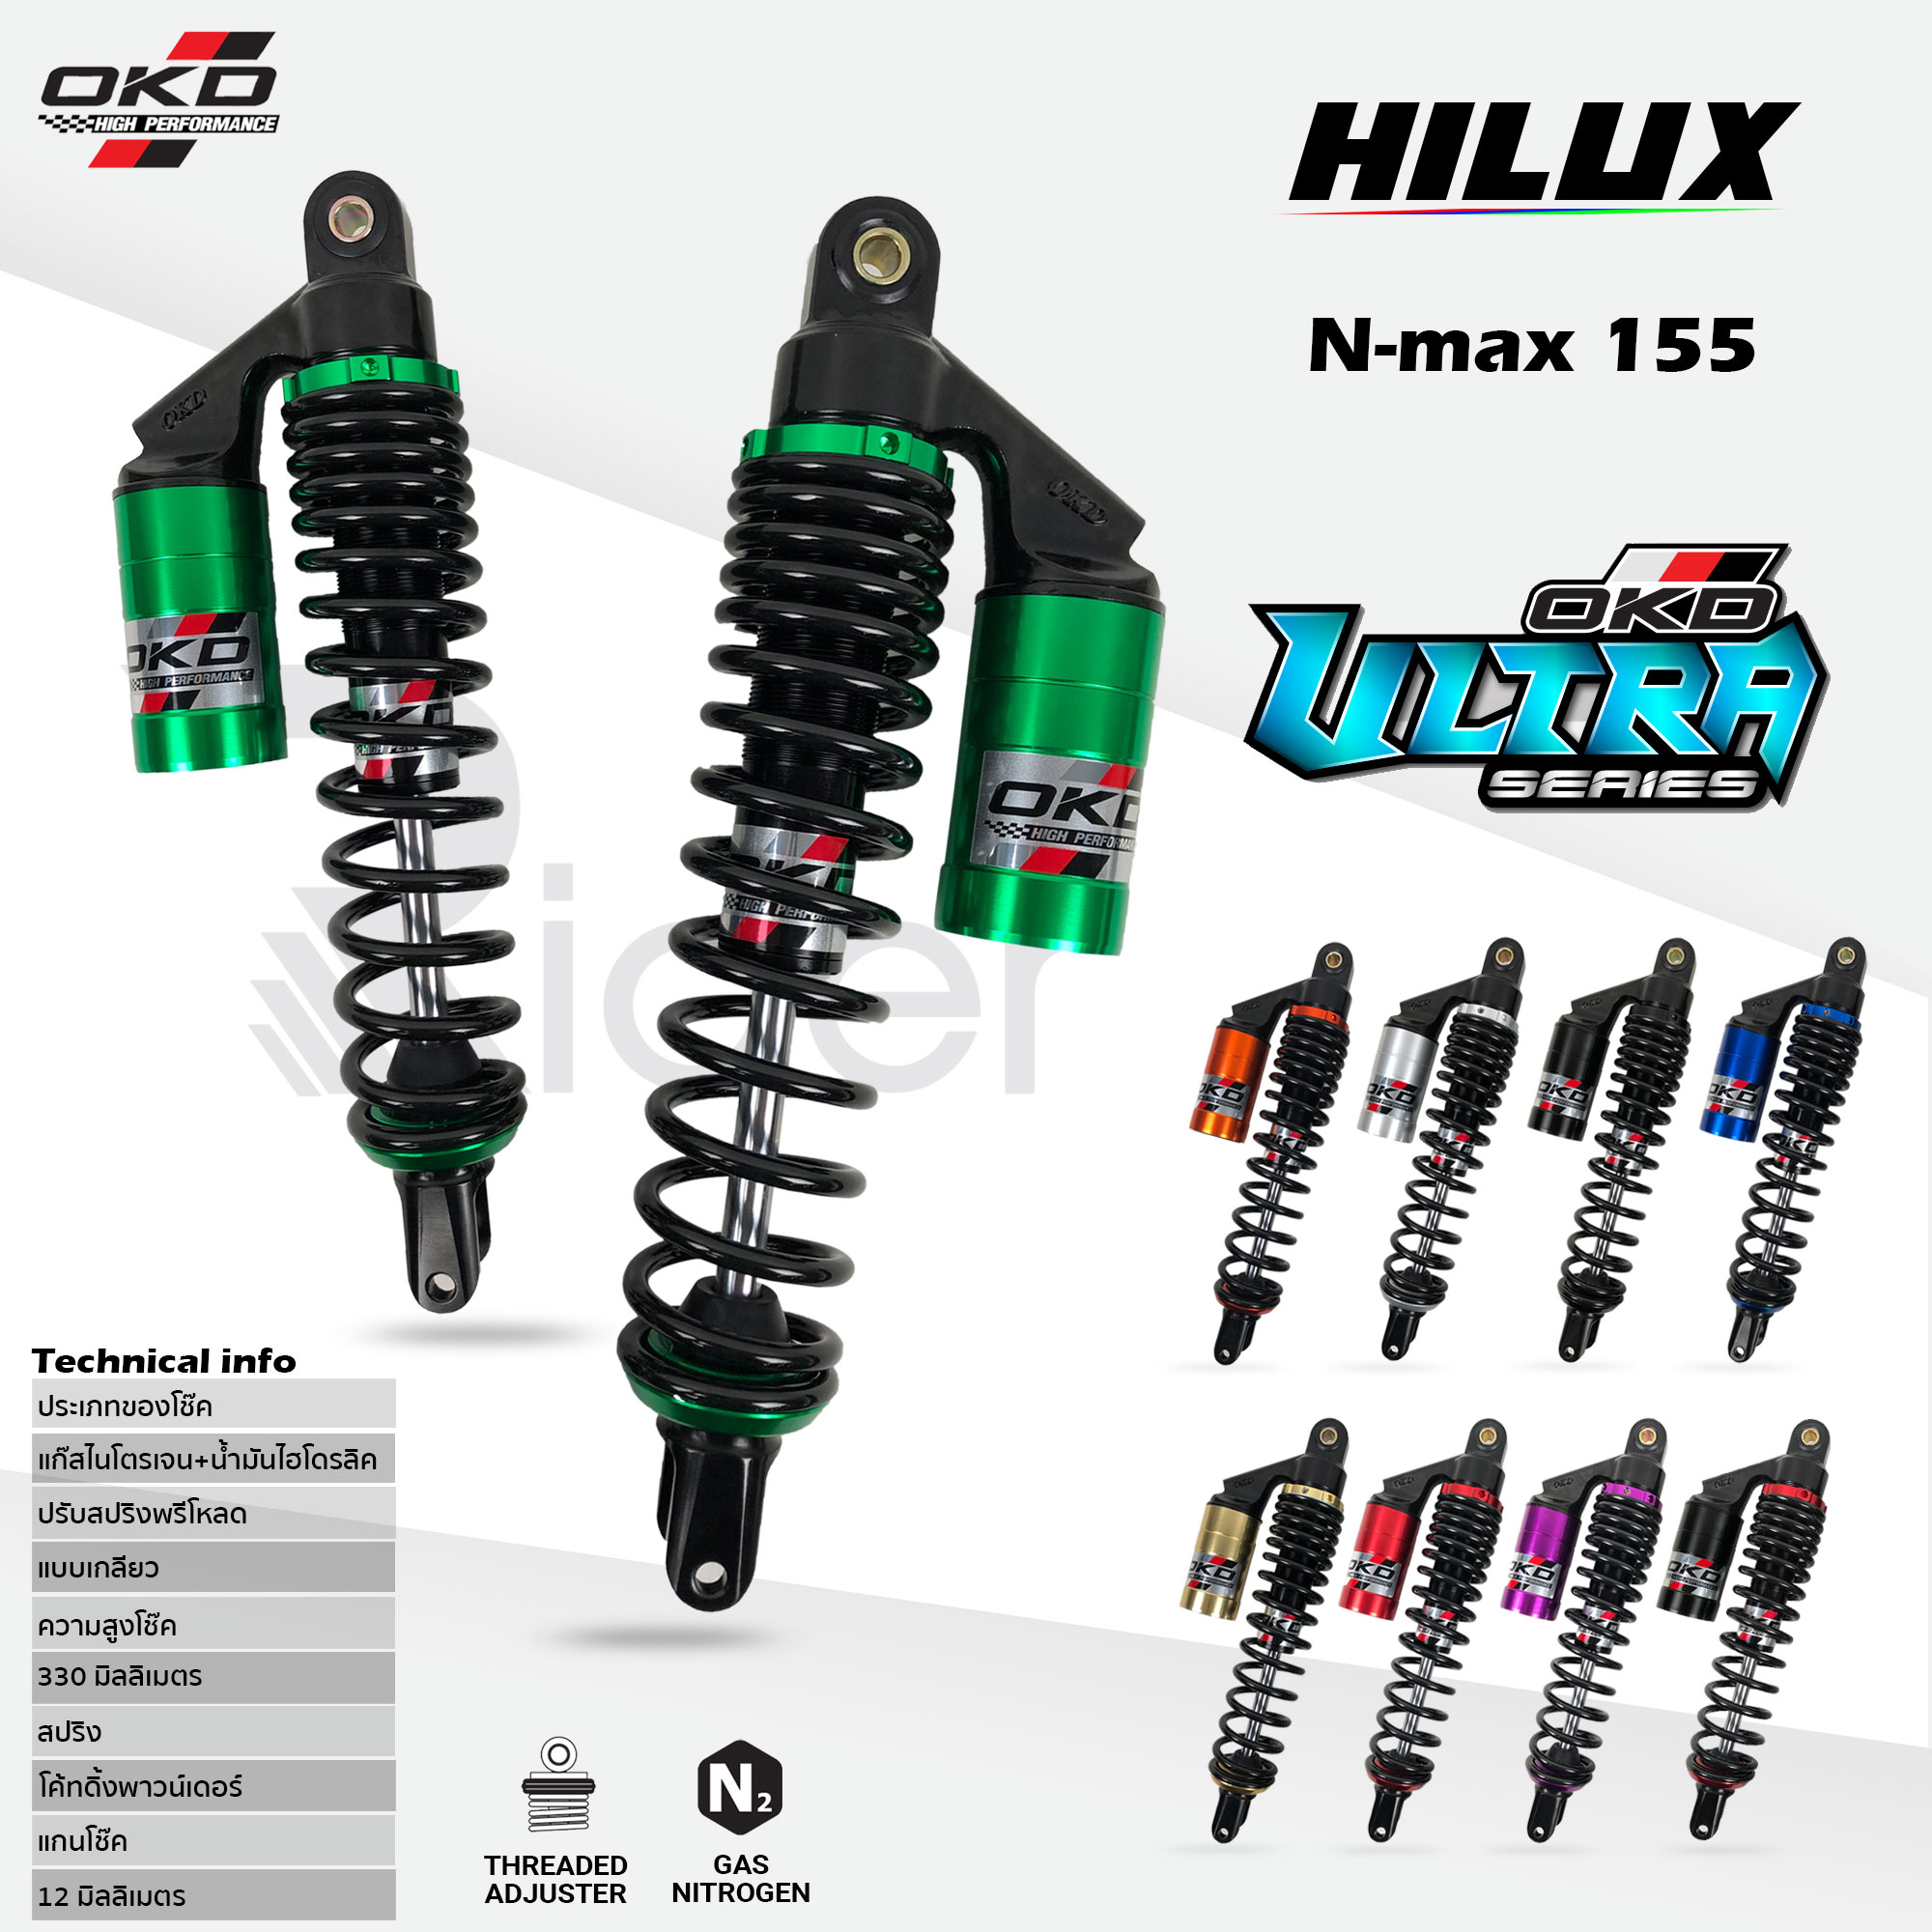 The Rider โช๊ค หลังคู่ OKD สำหรับ มอเตอร์ไซค์ รุ่น N-max โช๊คแก๊ส รุ่น Hilux (ปรับ Rebound ไม่ได้) มี 9 สี โช๊คหลัง 33 ซม. สี สีเขียว สี สีเขียว